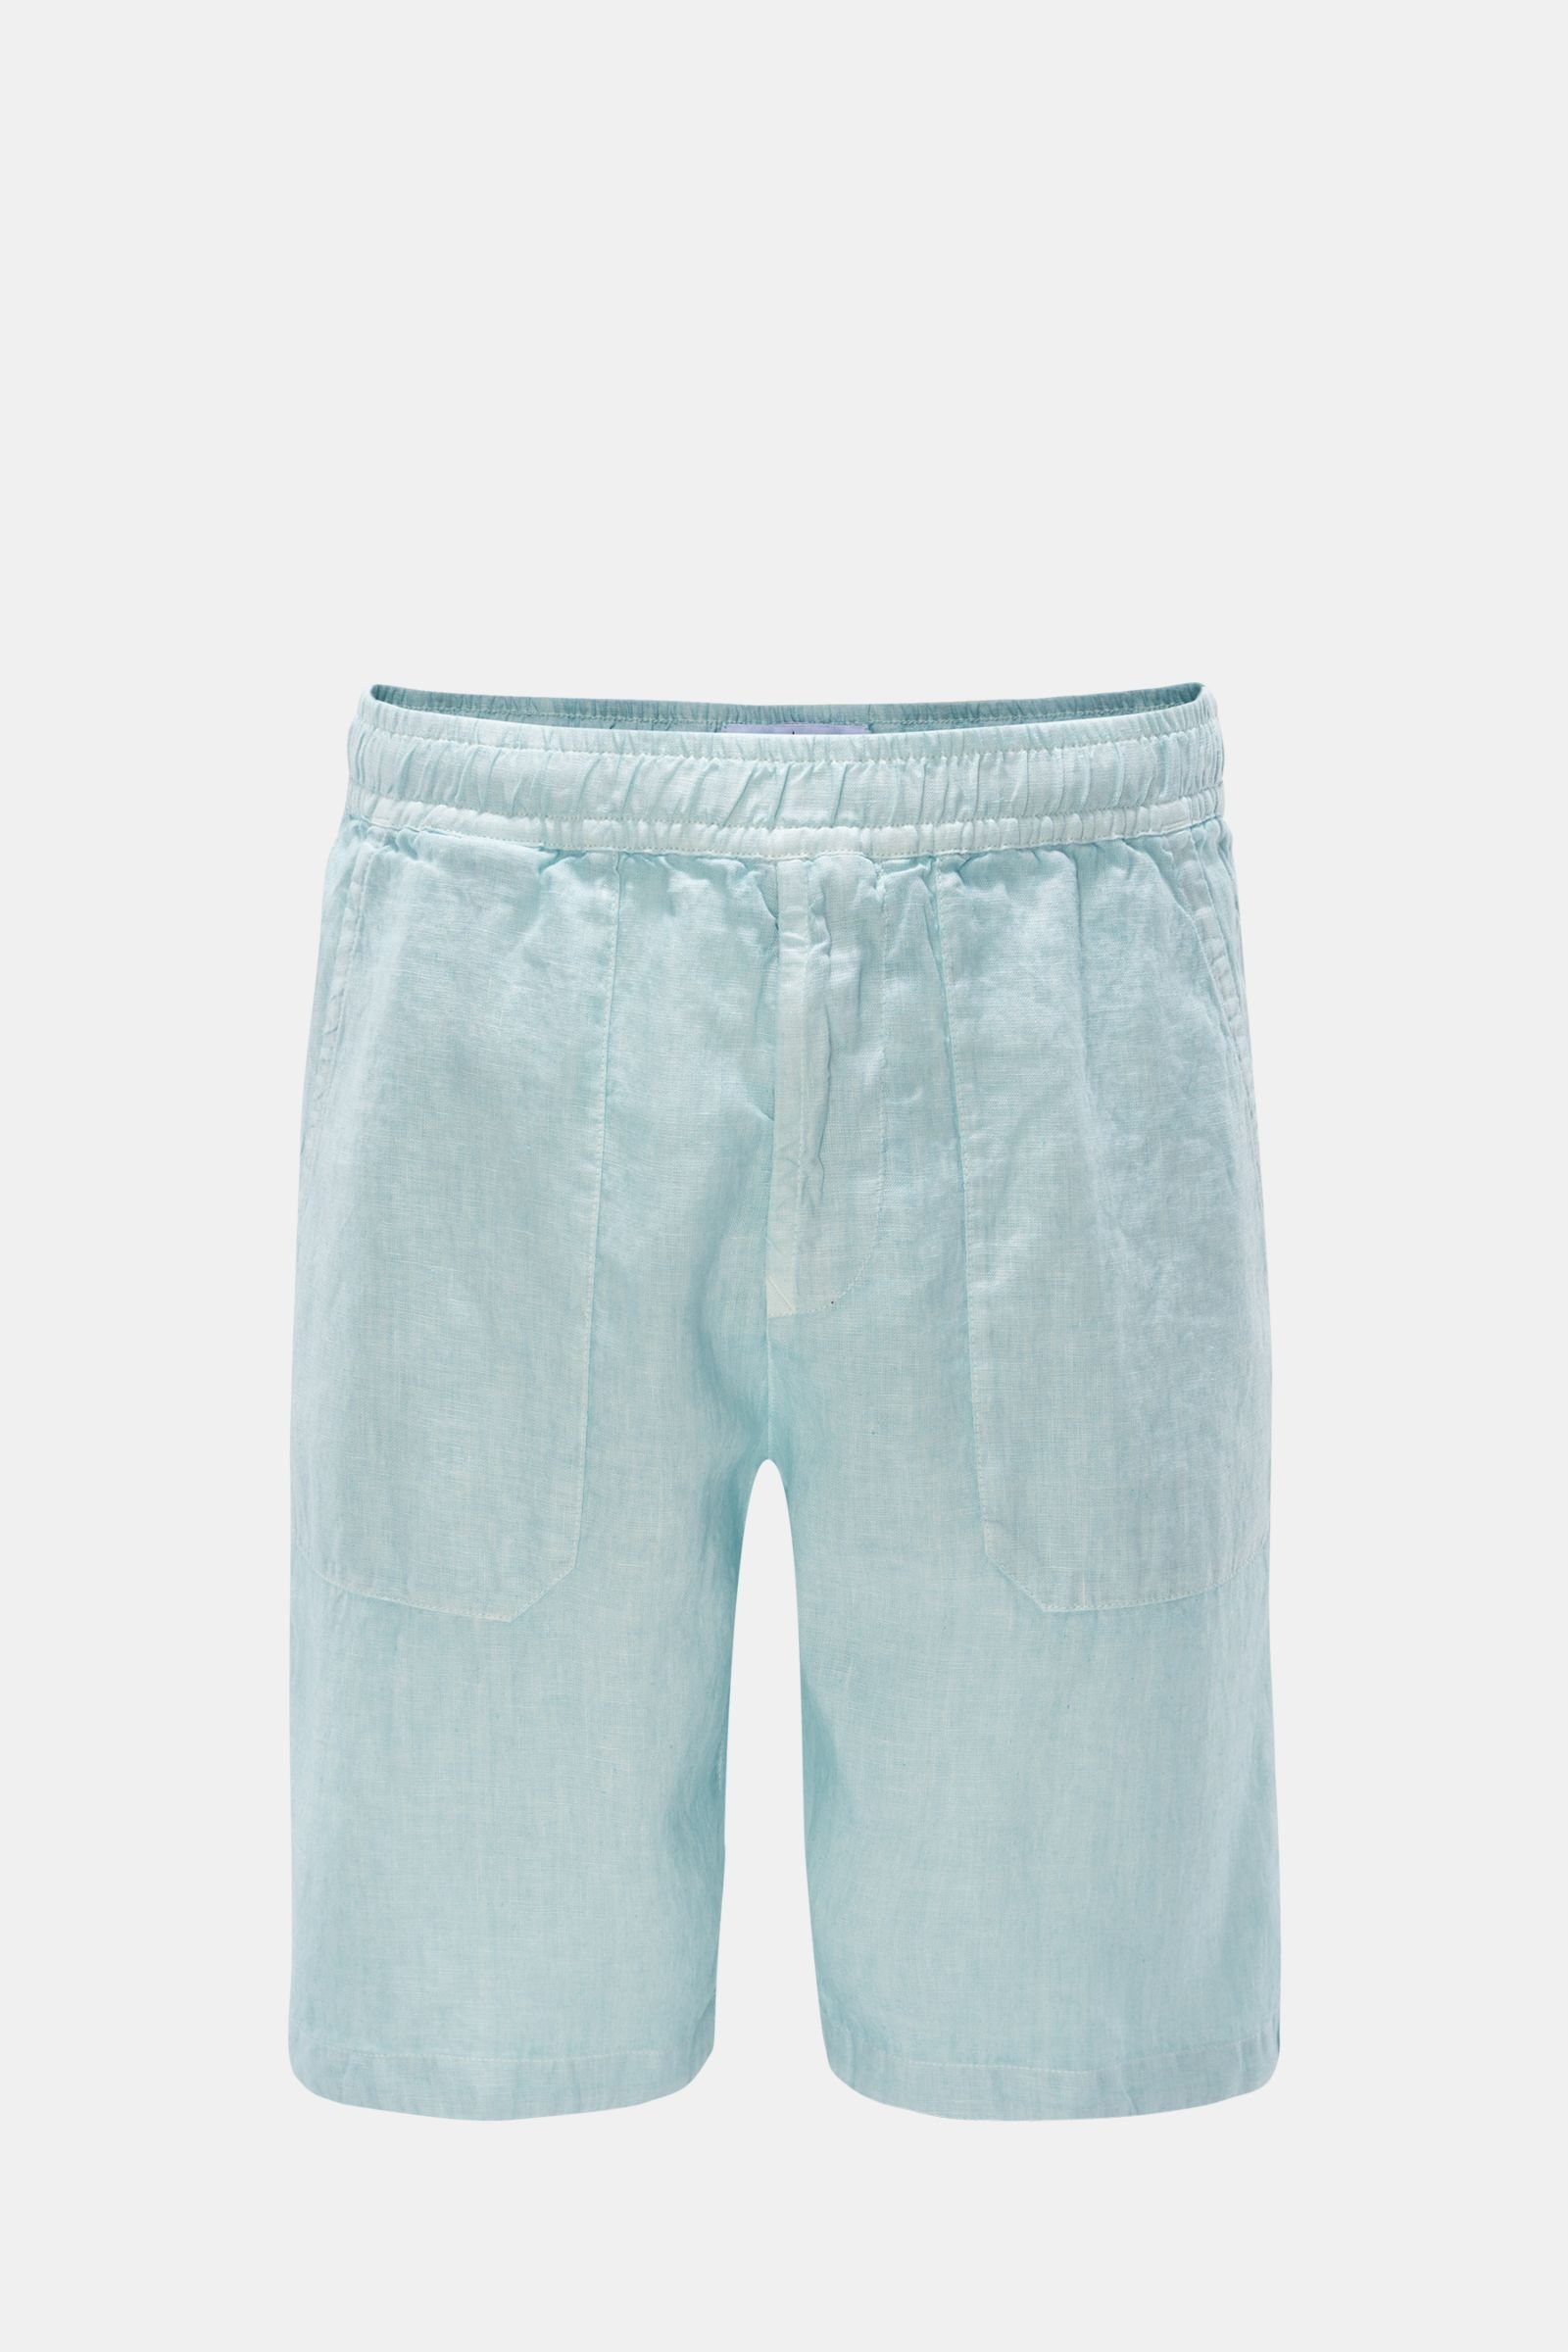 Linen Bermuda shorts turquoise